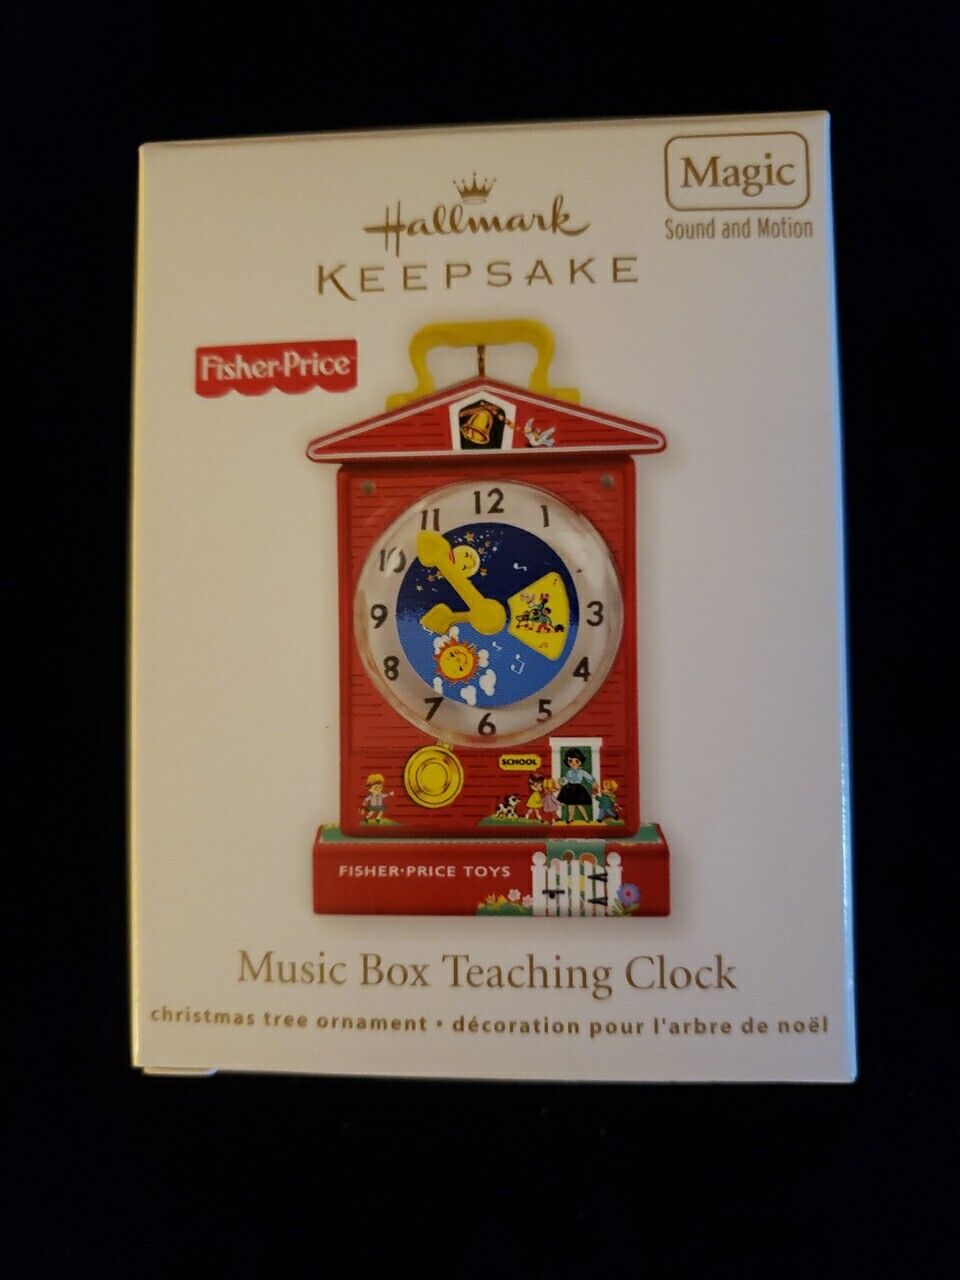 2011 Hallmark Keepsake Fisher Price Music Box Teaching Clock Ornament Tested